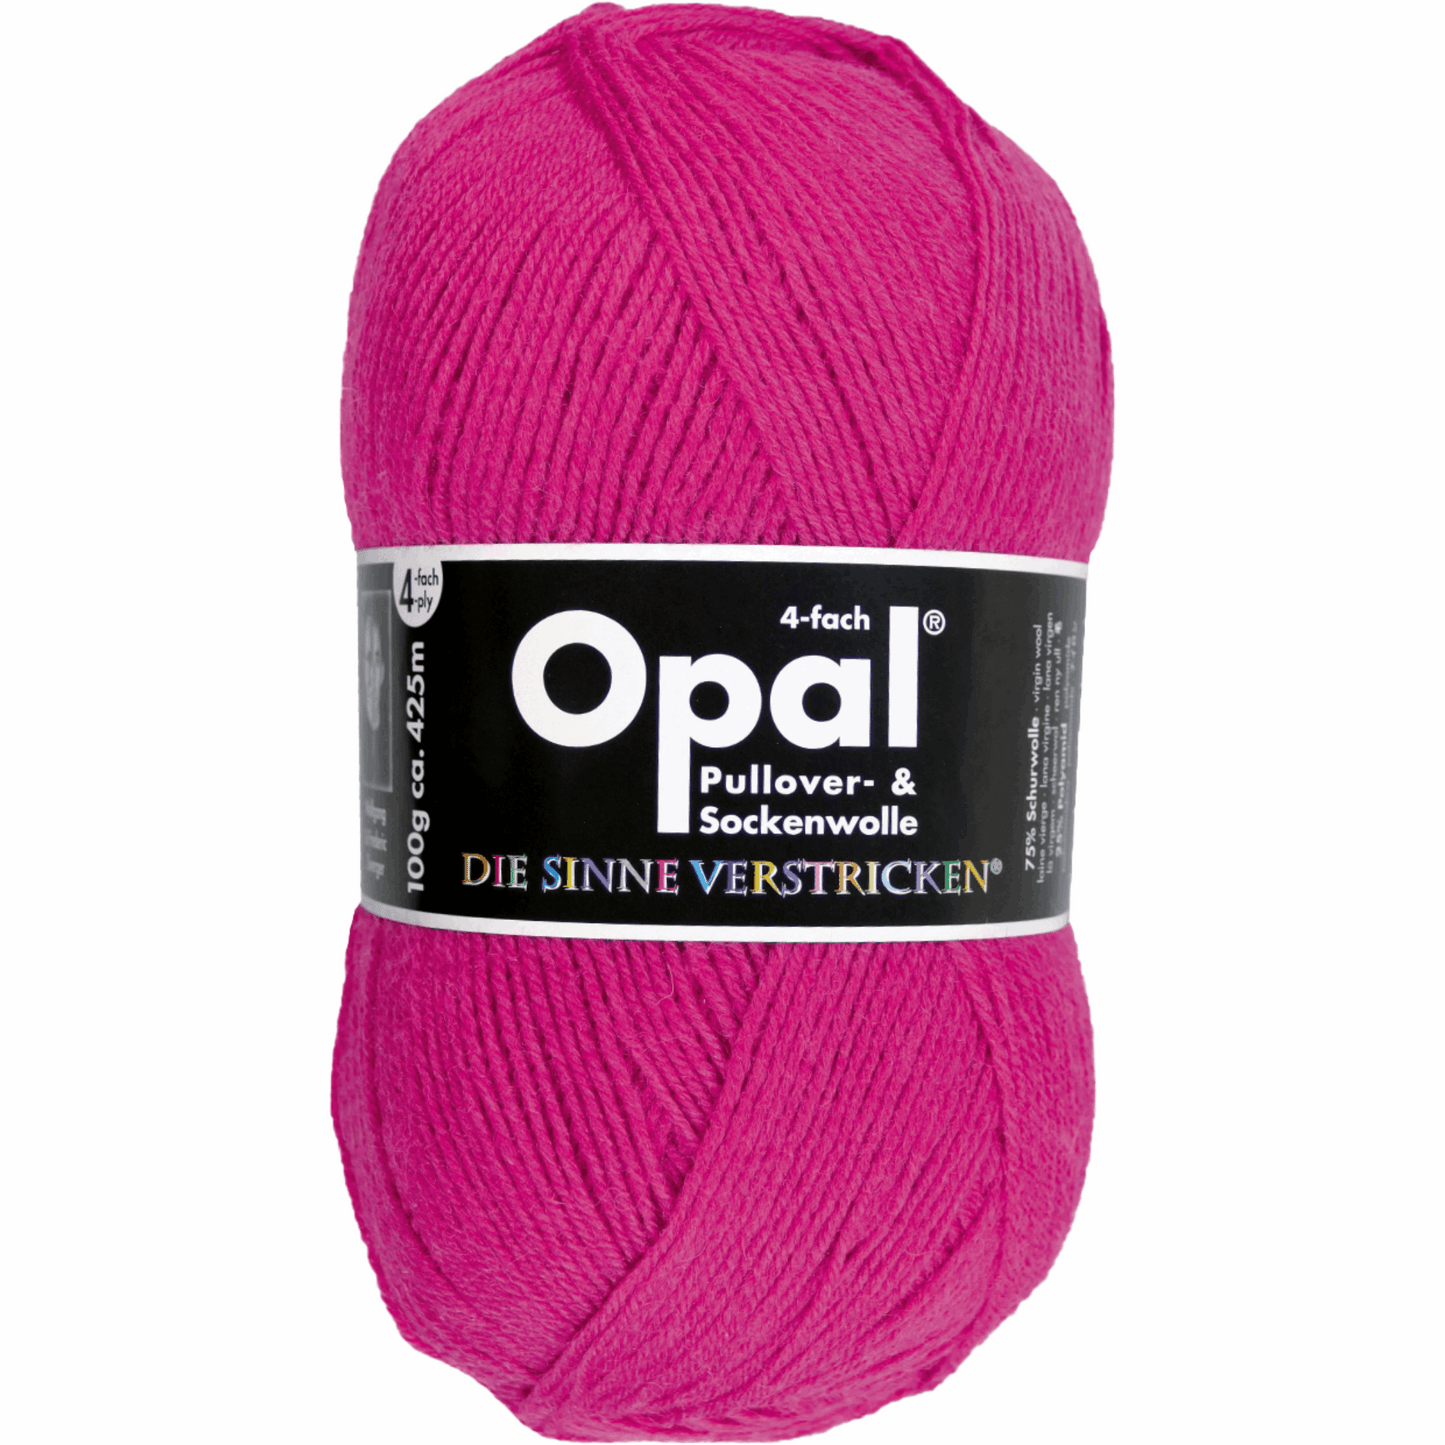 Opal plain 4 threads. 100g 2011/12, 97760, color pink 5194